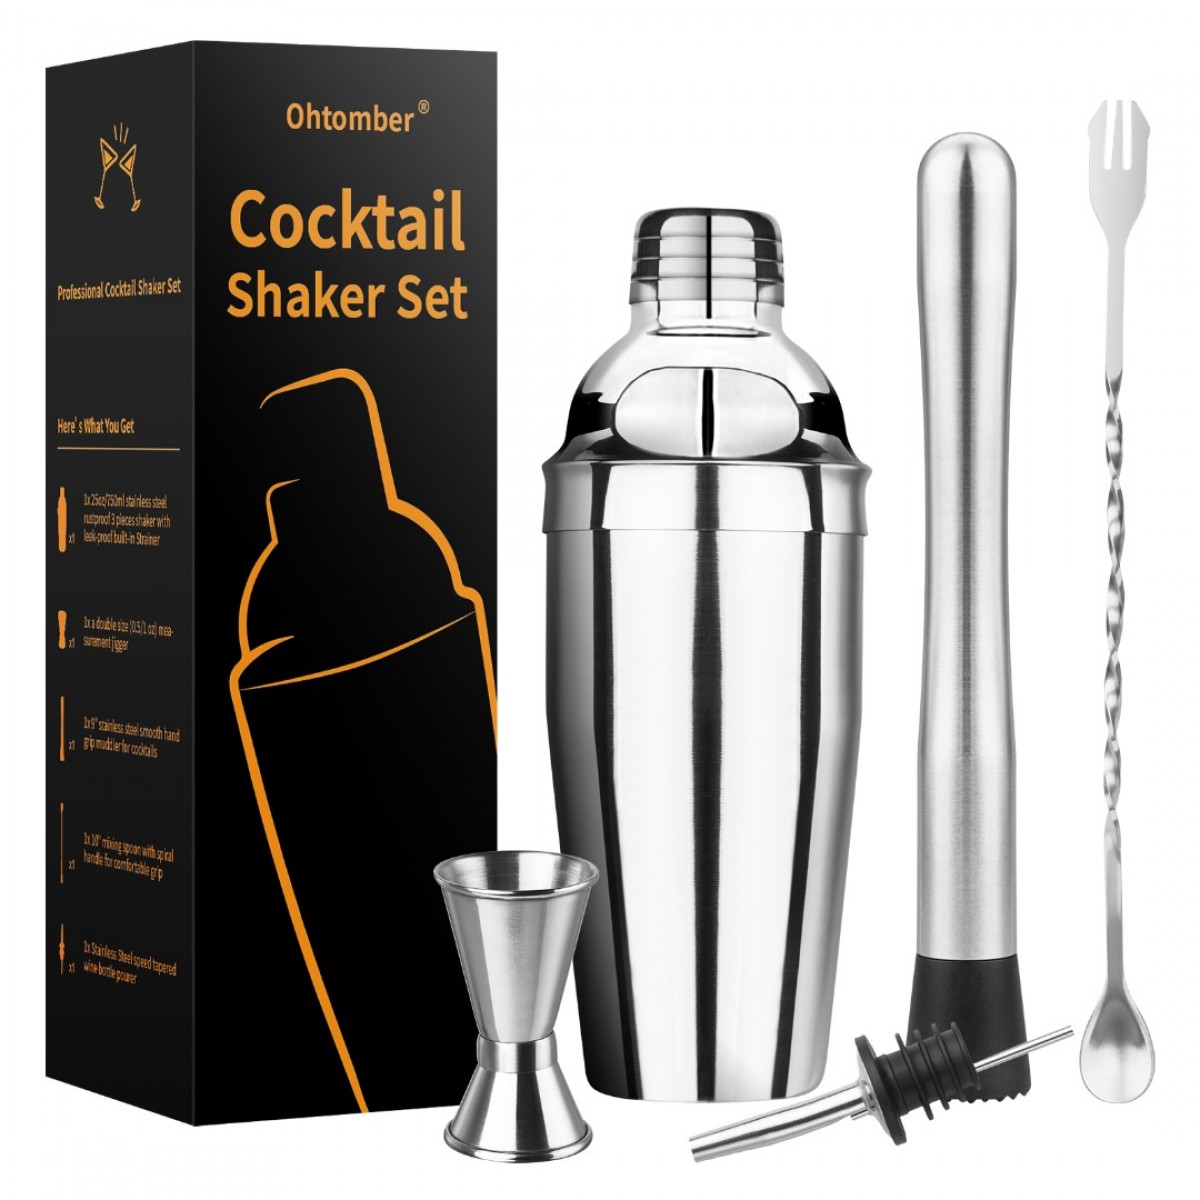 Ohtomber Cocktail Shaker Bartender Kit - 5 Pieces Cocktail Martini Shaker with Strainer, Muddler for